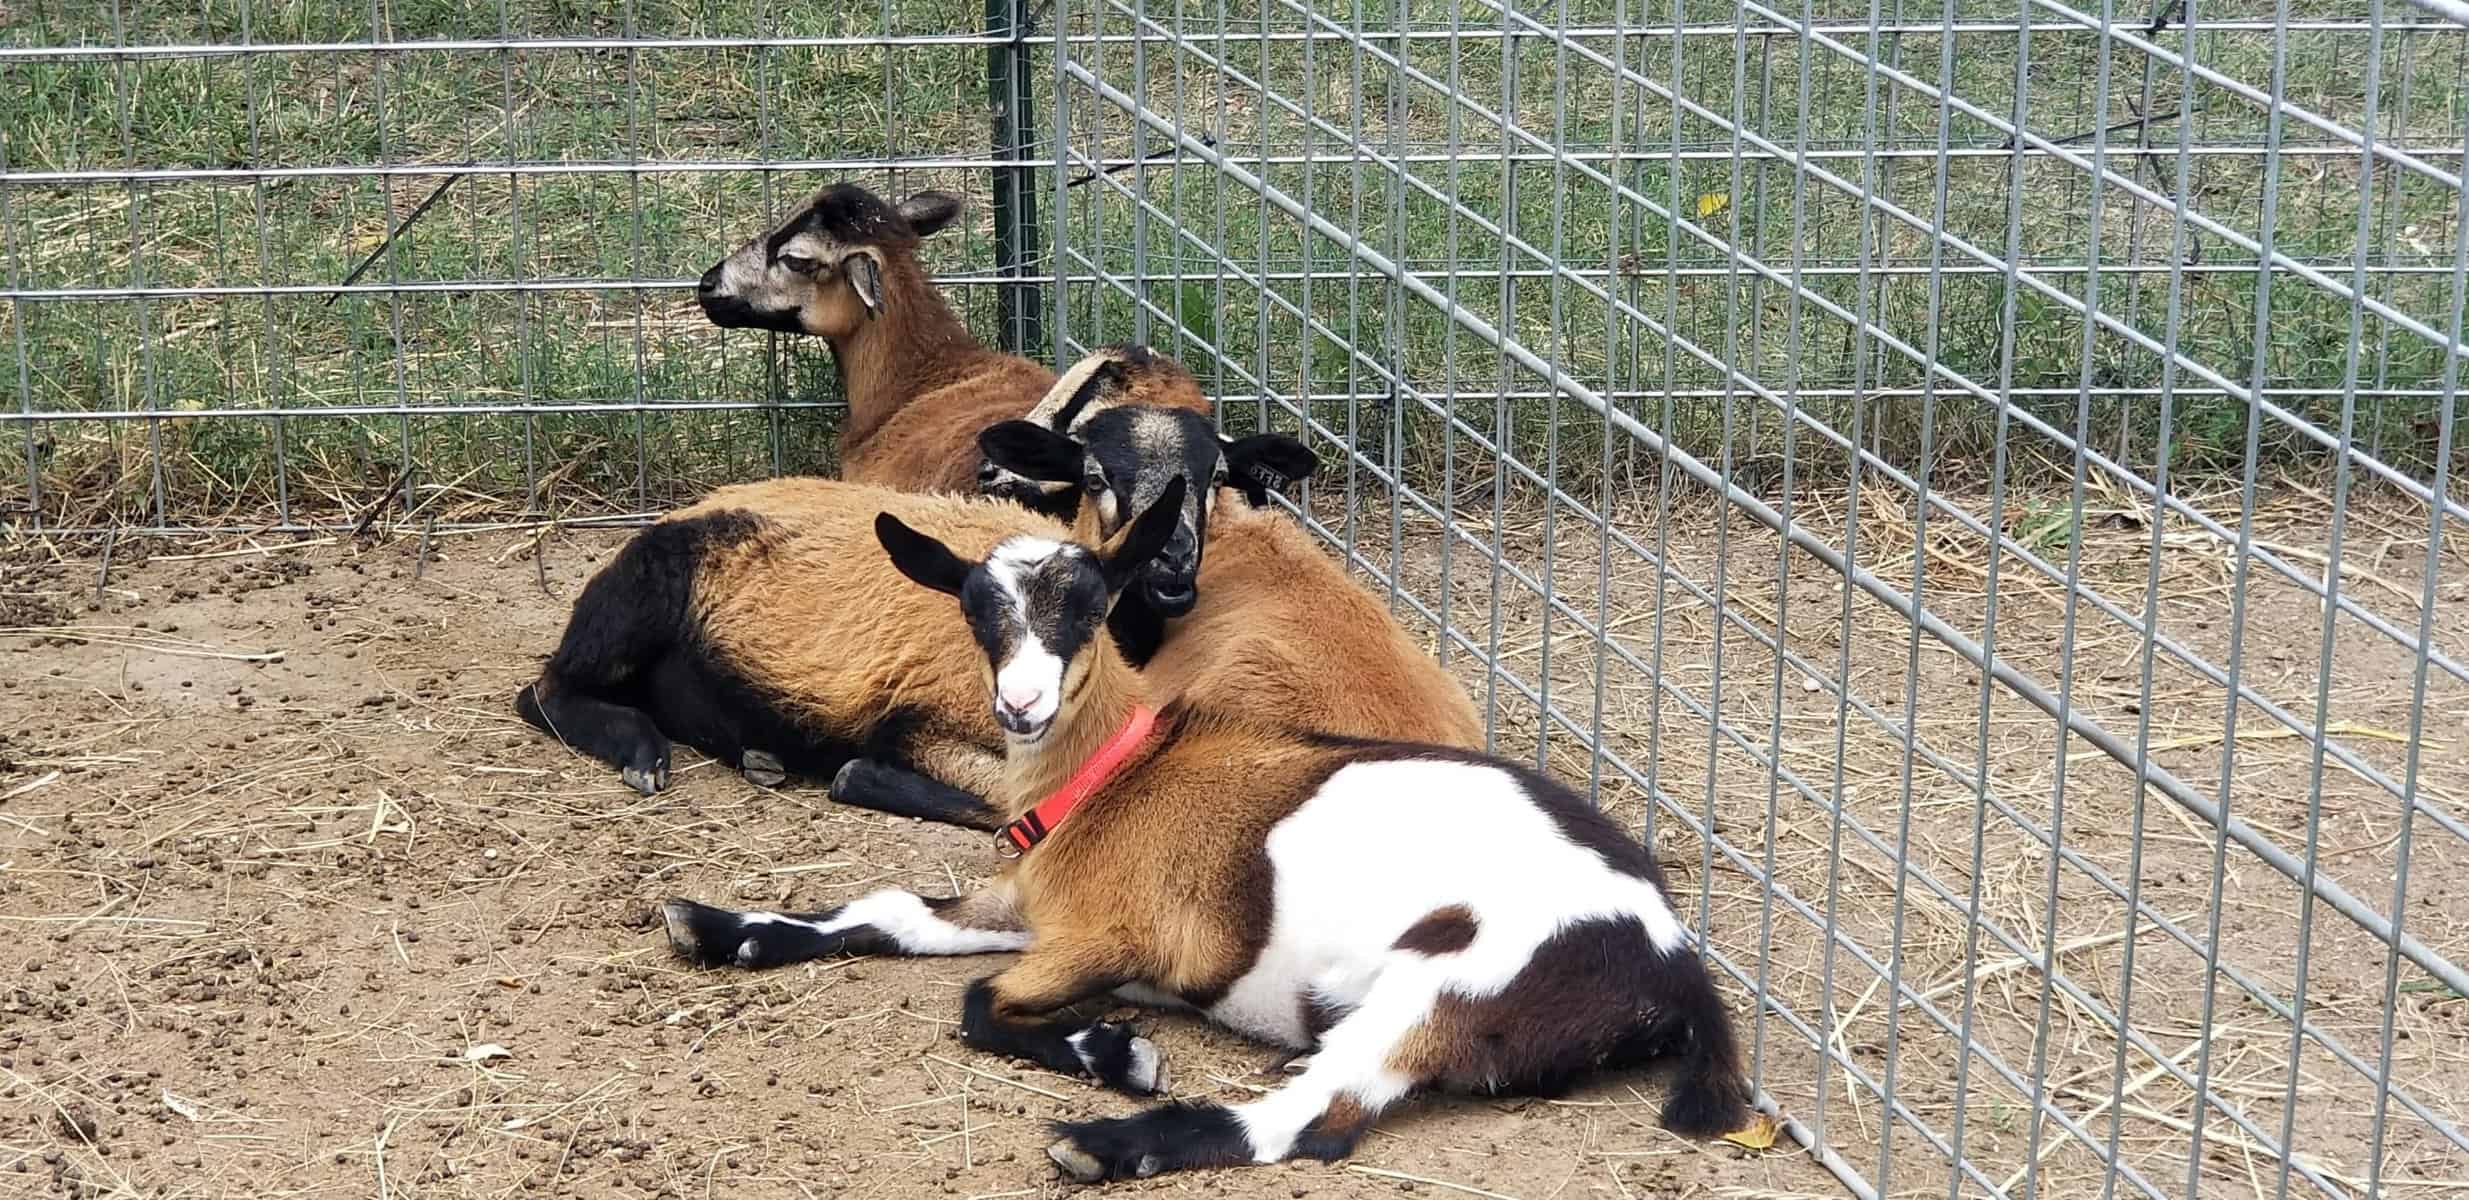 3 American Blackbelly sheep and one Nigerian Dwarf goat